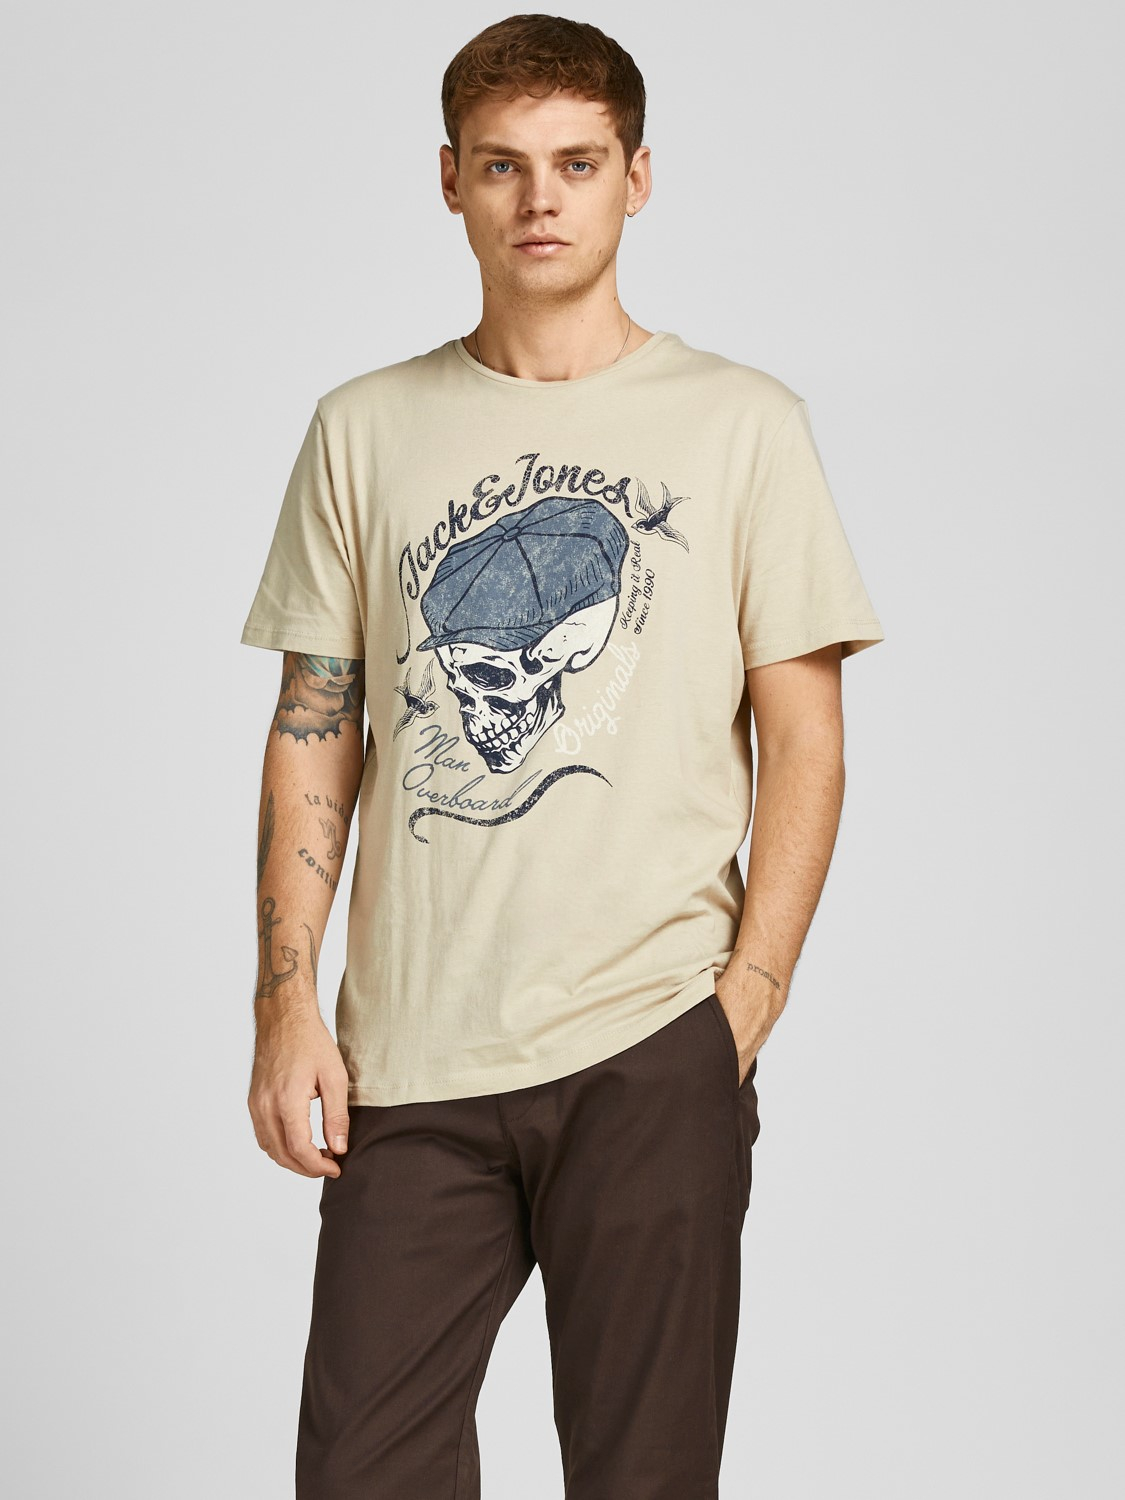 Jack & Jones samarreta d'home Dome de m/c 12205684 blanc trencat